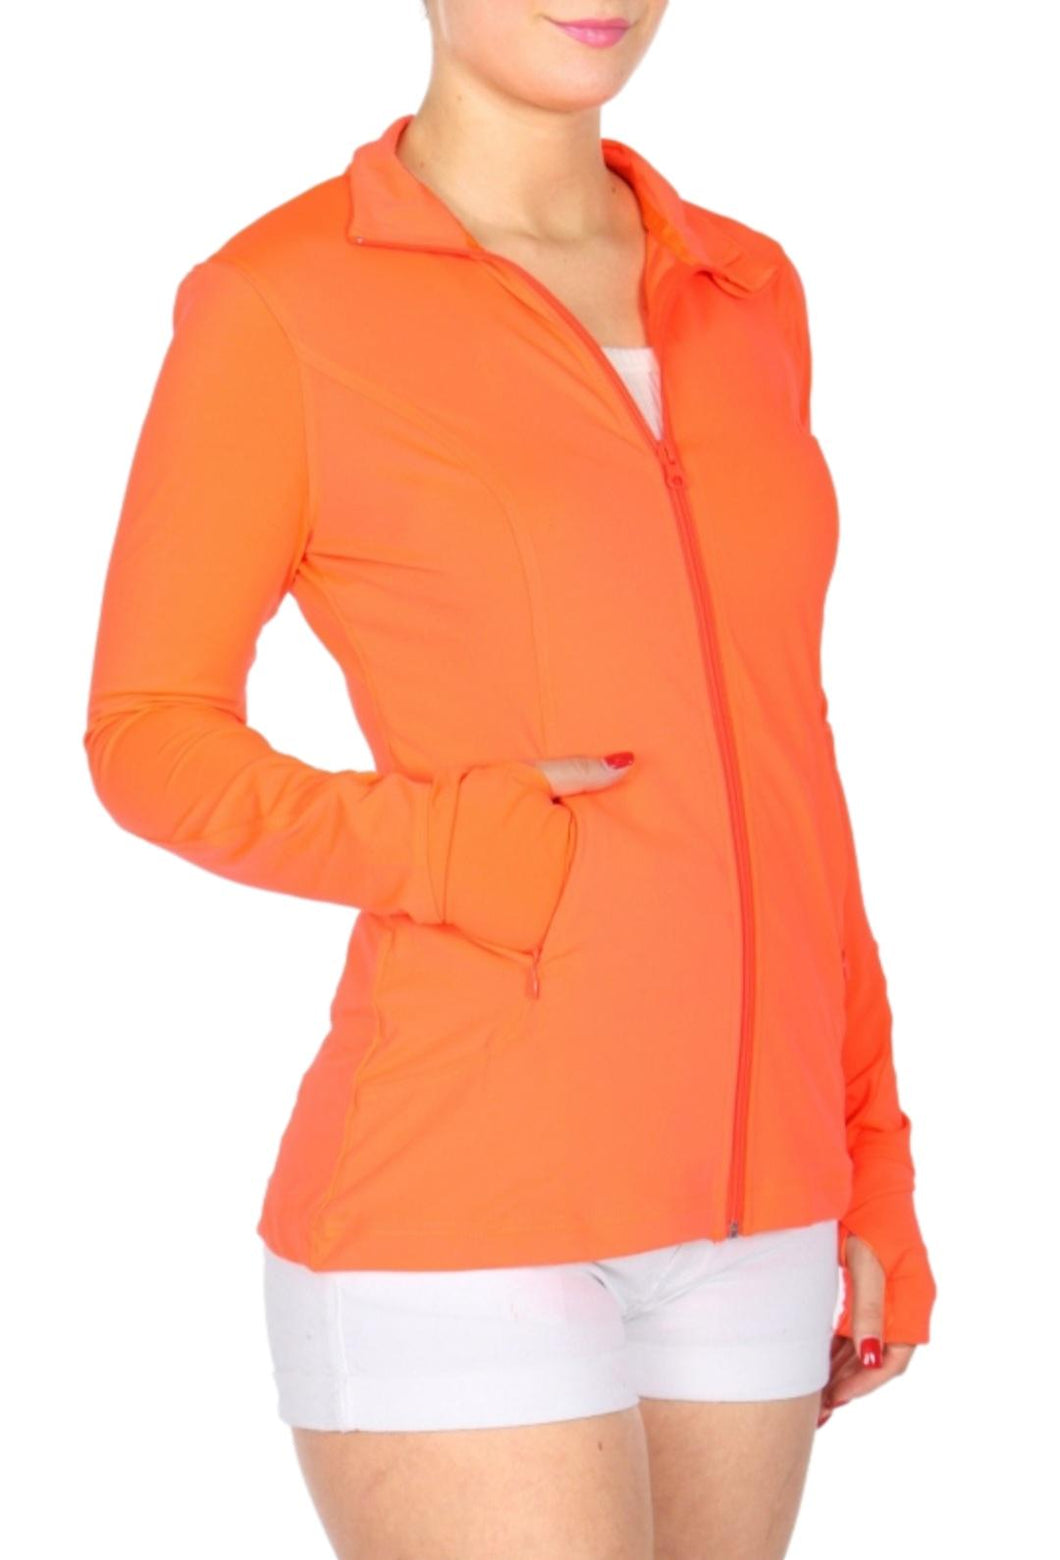 Women's Neon Orange Bodycon Crossfit Jacket